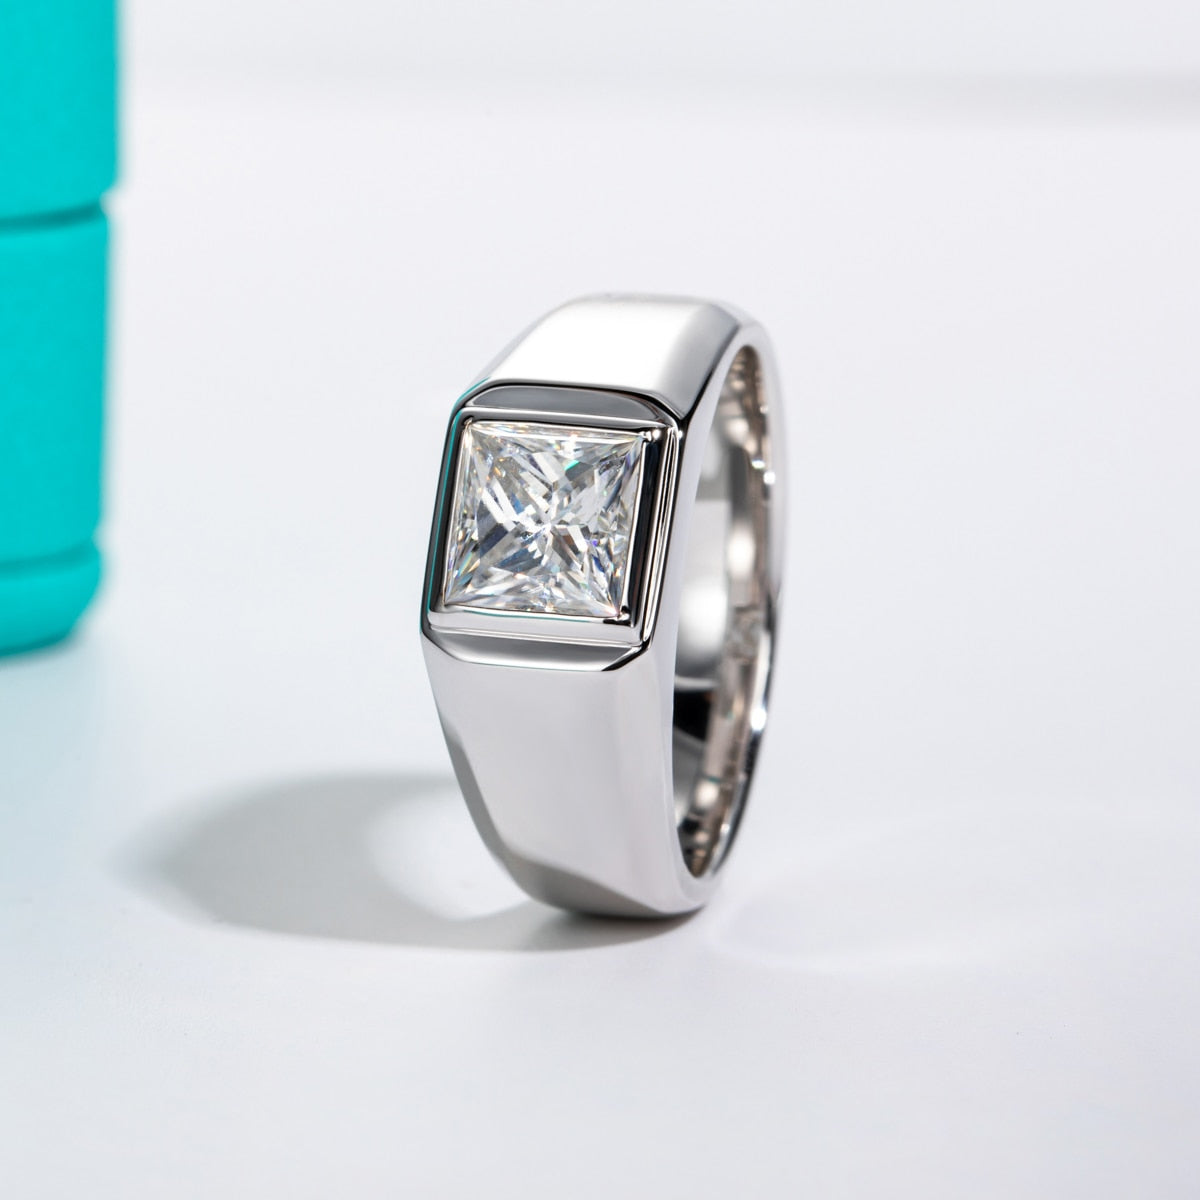 2 Carat Princess Cut Mens Moissanite Diamond Ring Sterling Silver